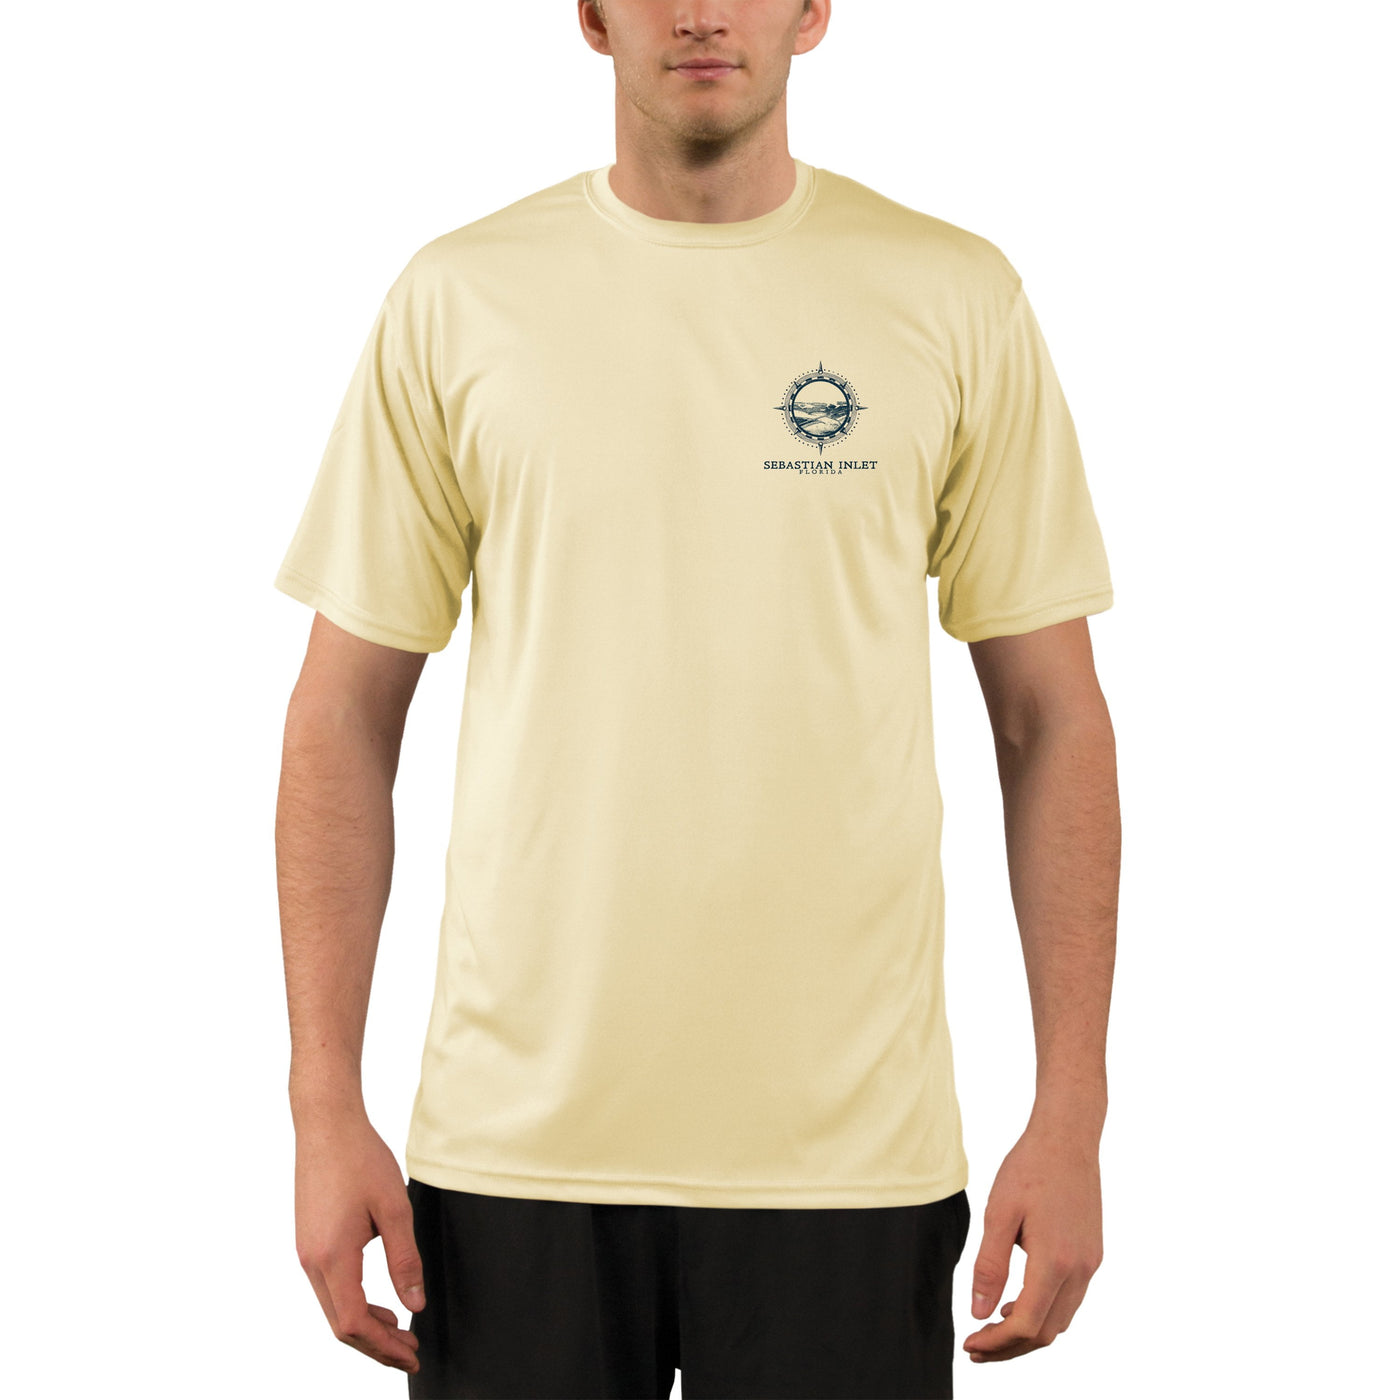 Compass Vintage Sebastian Inlet Men's UPF 50+ Short Sleeve T-shirt